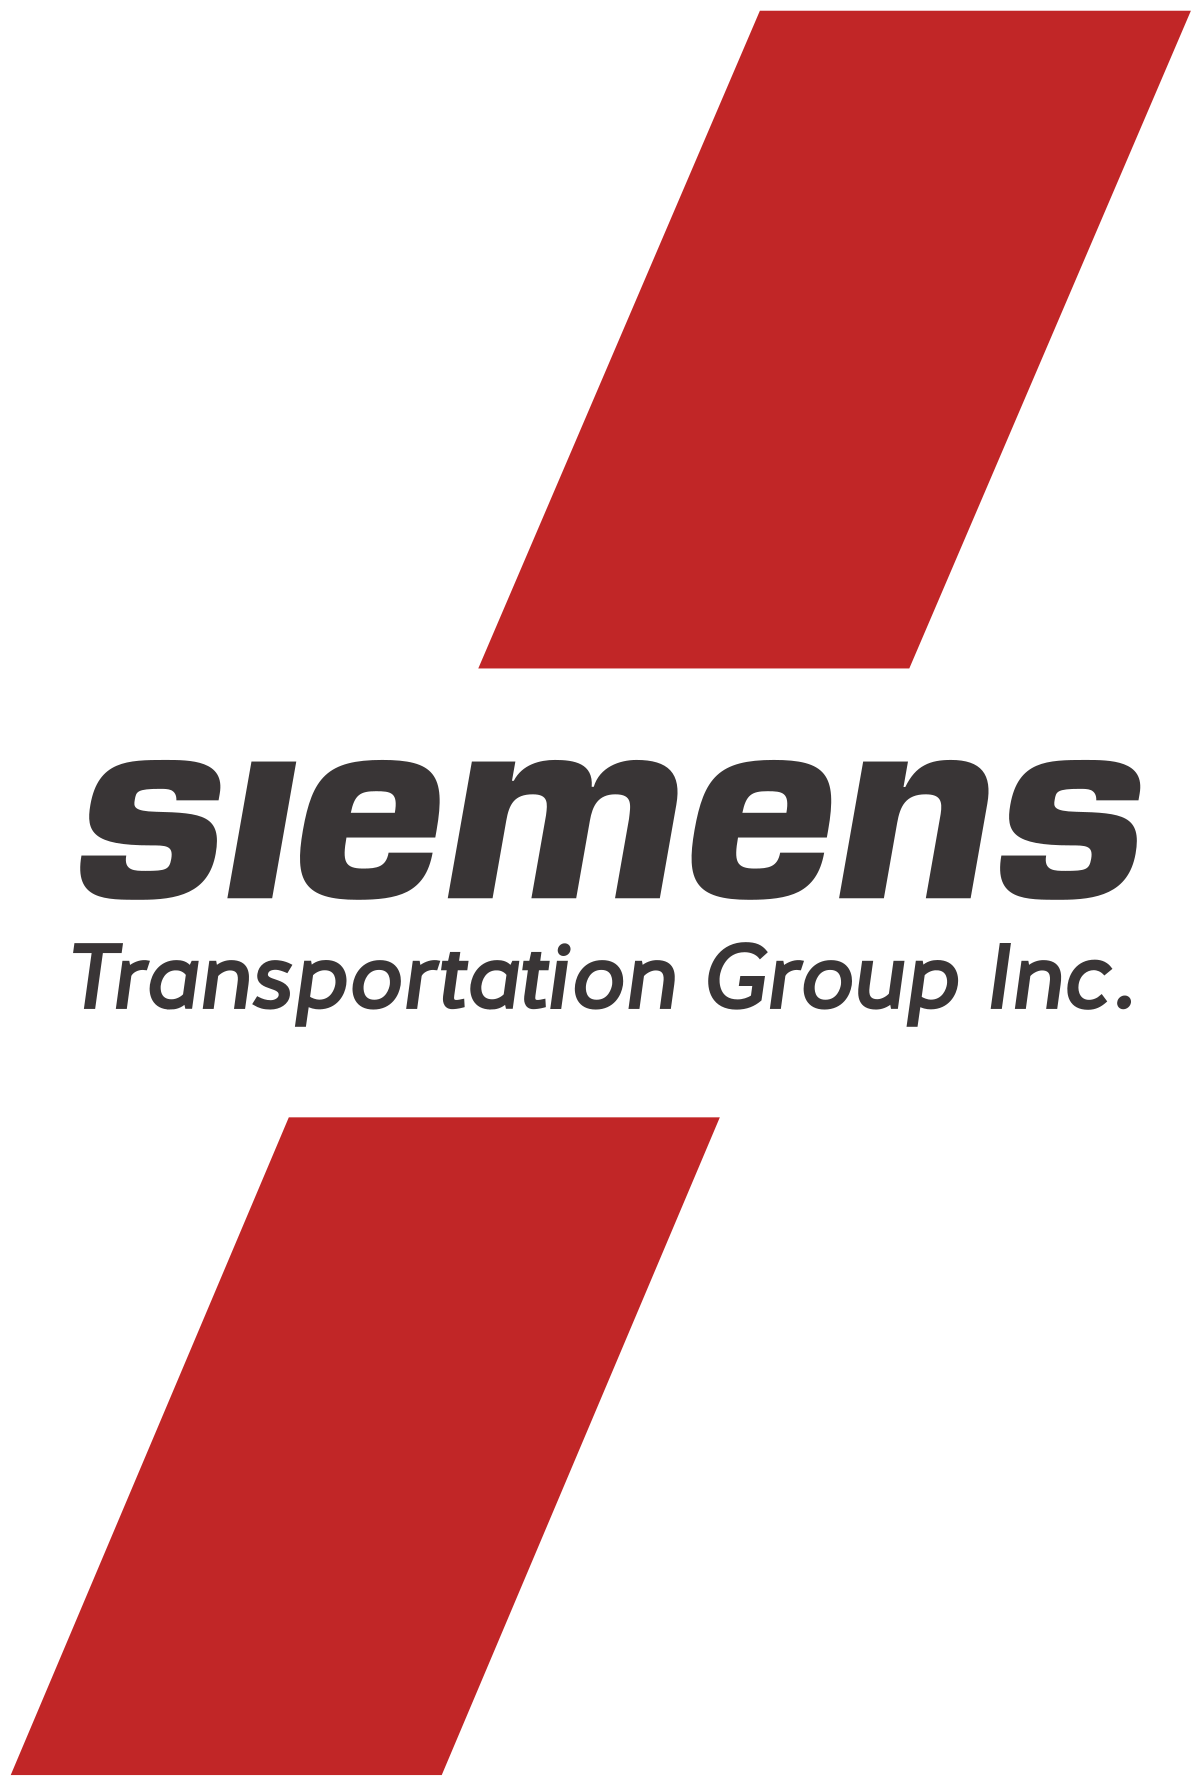 Siemens Transportation Group - Wikipedia